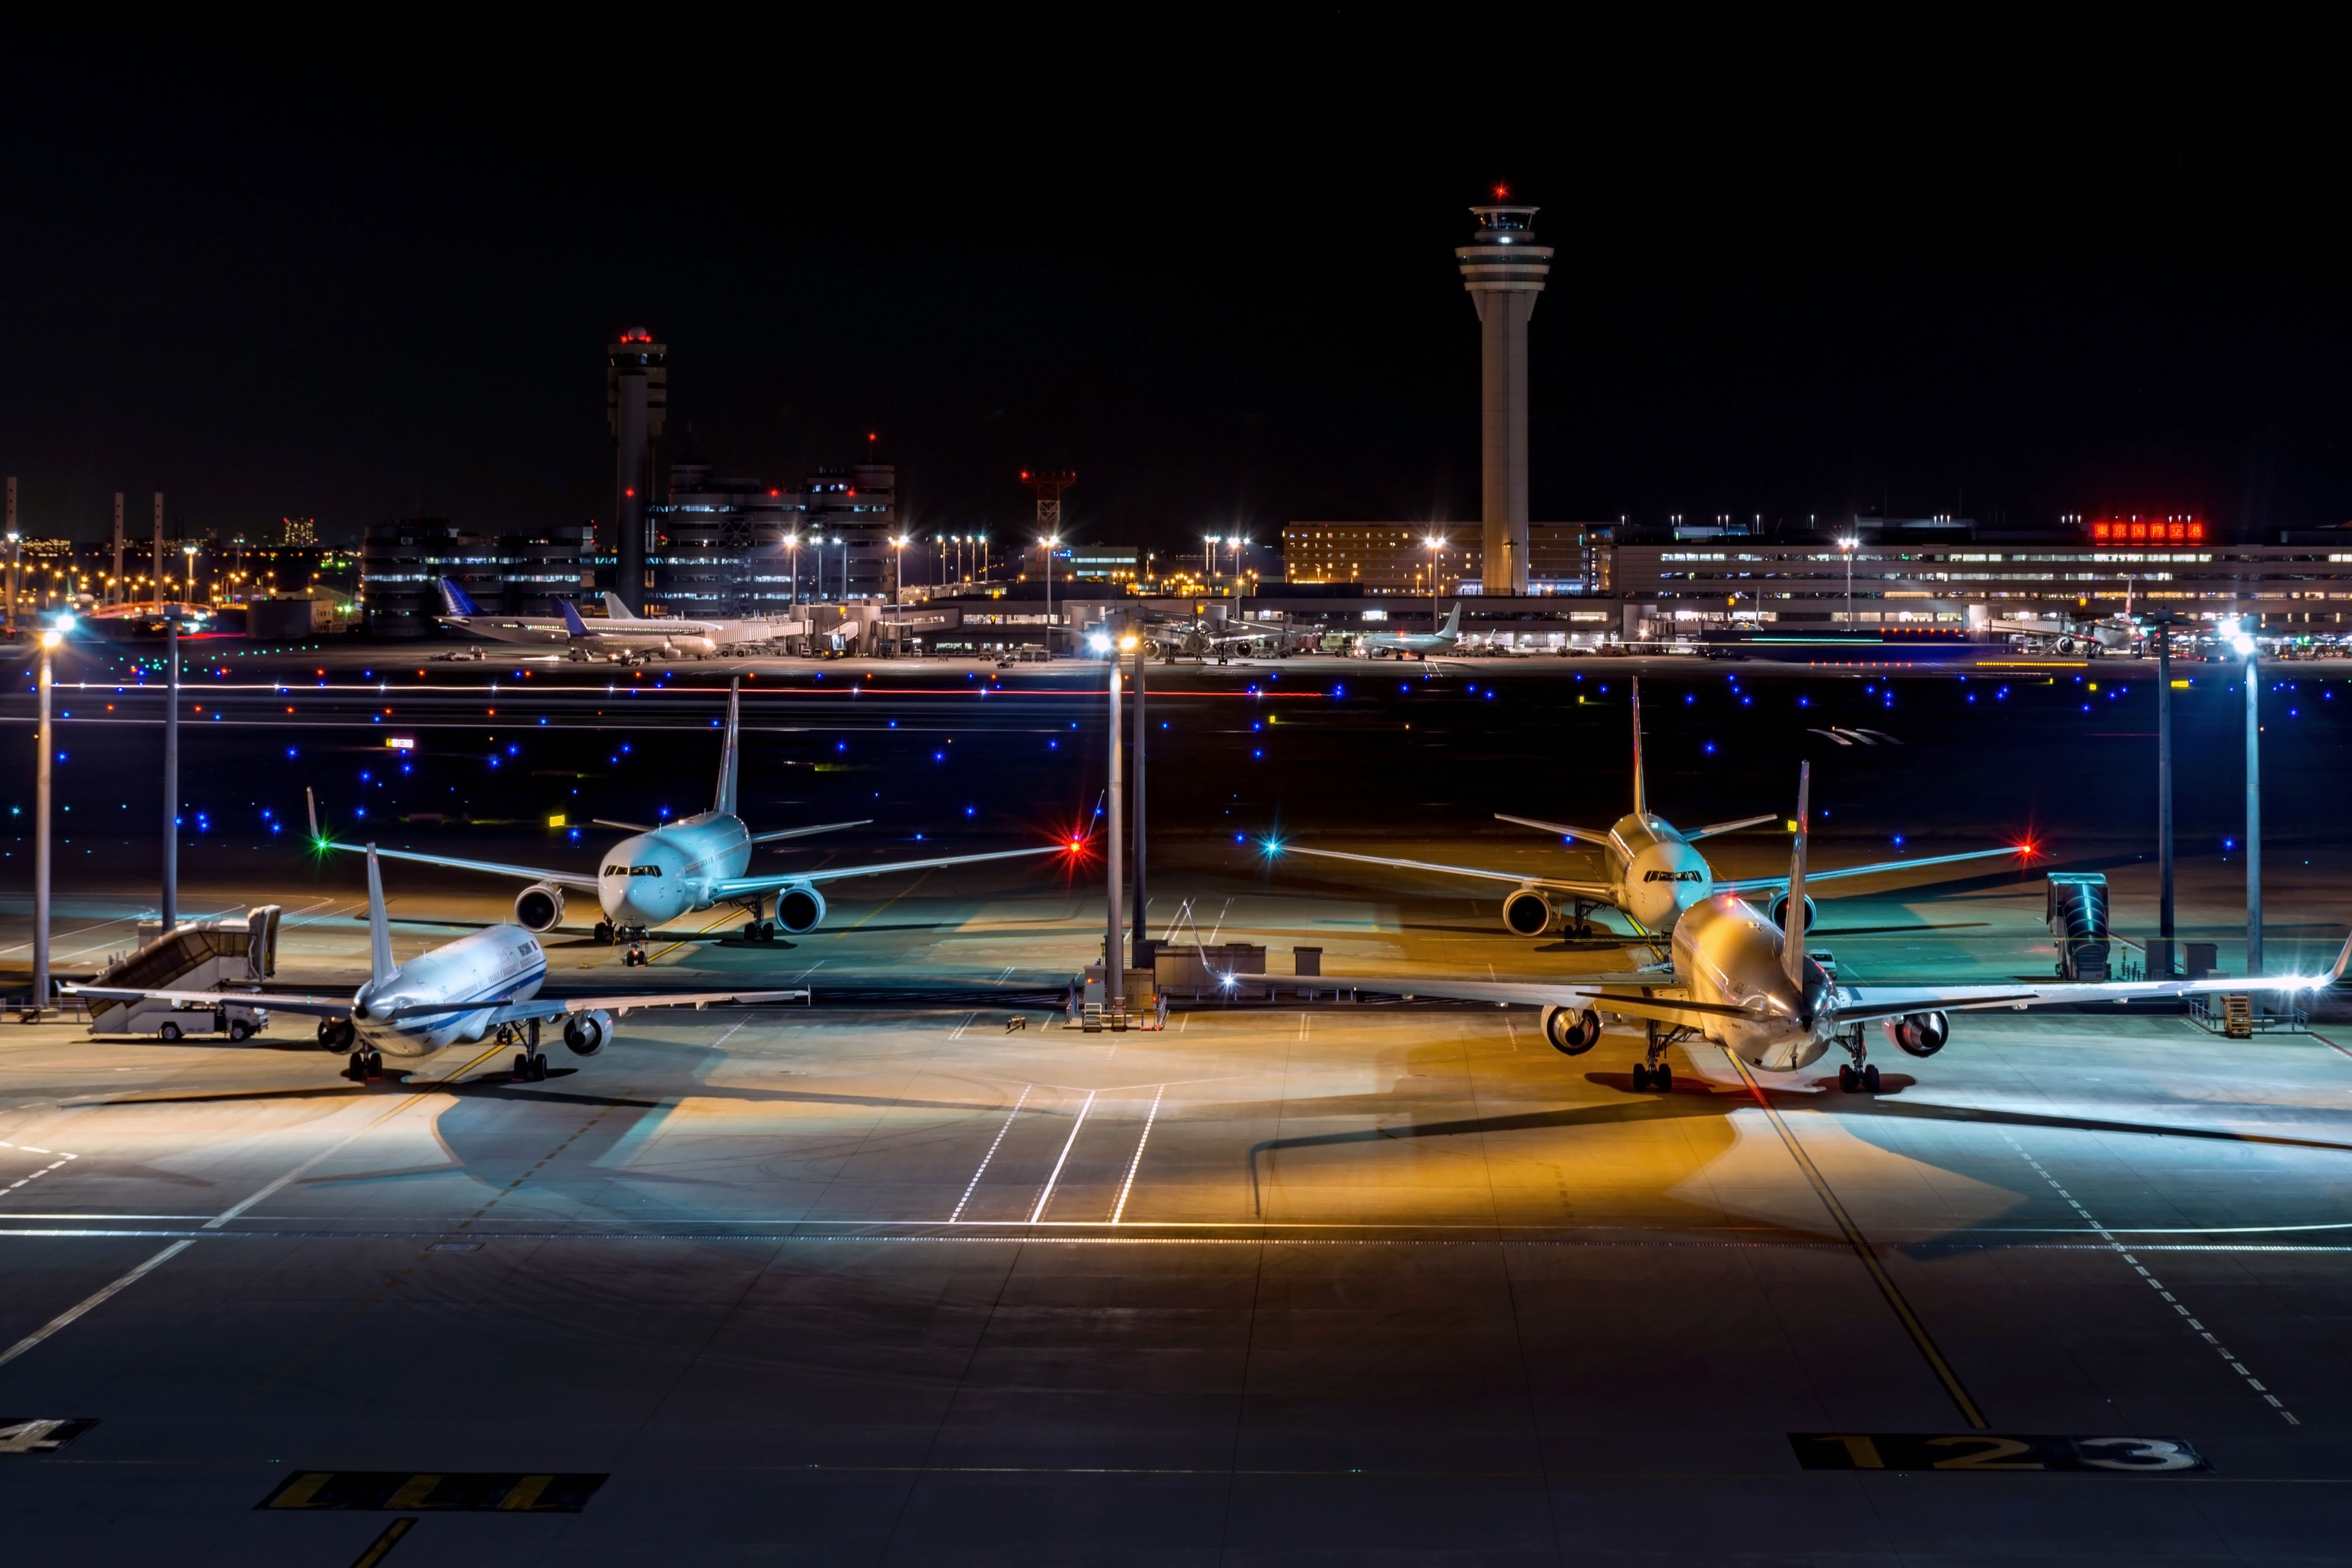 An airport at night